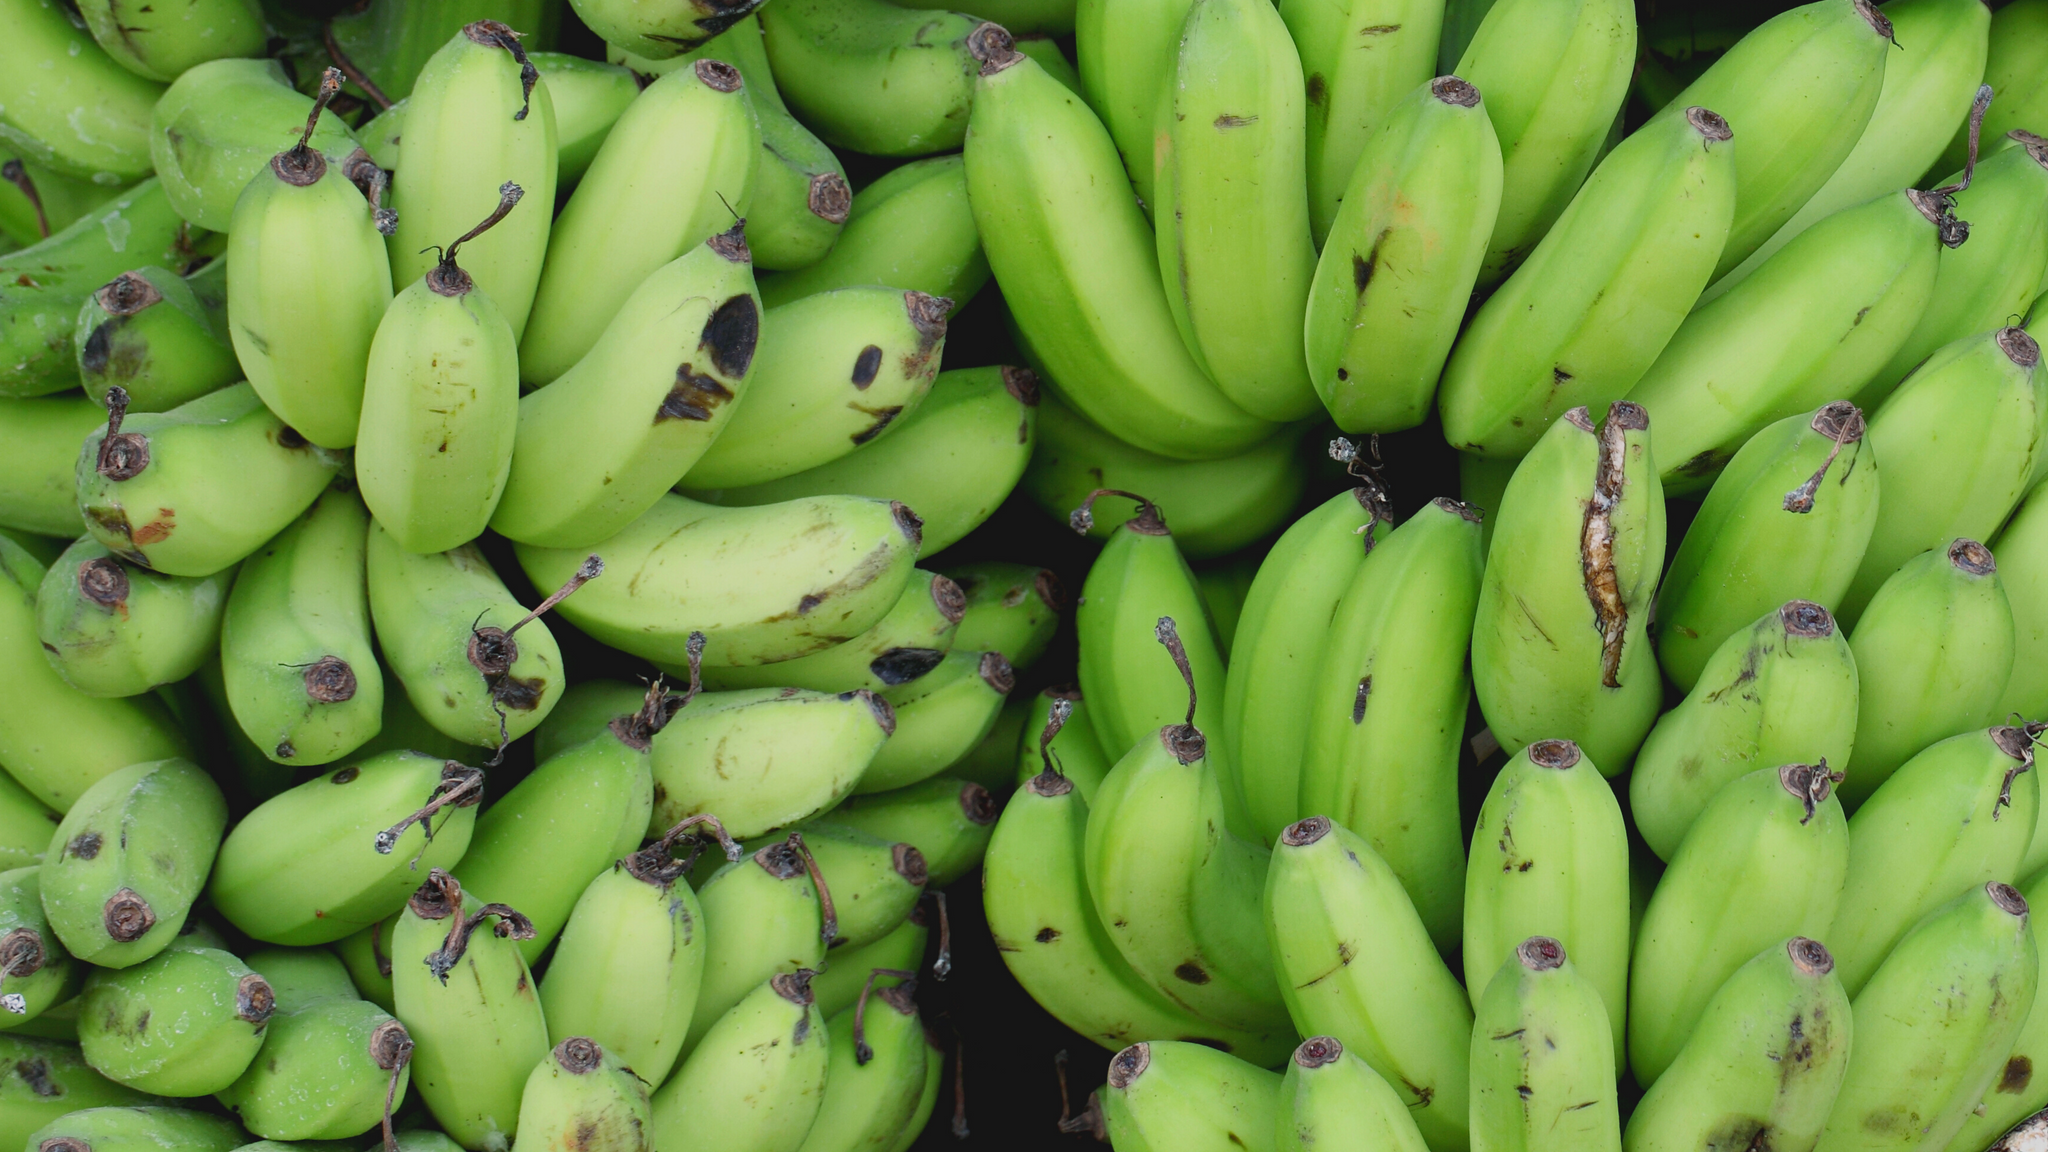 green bananas for organic traditions blog superfood spotlight green banana flour